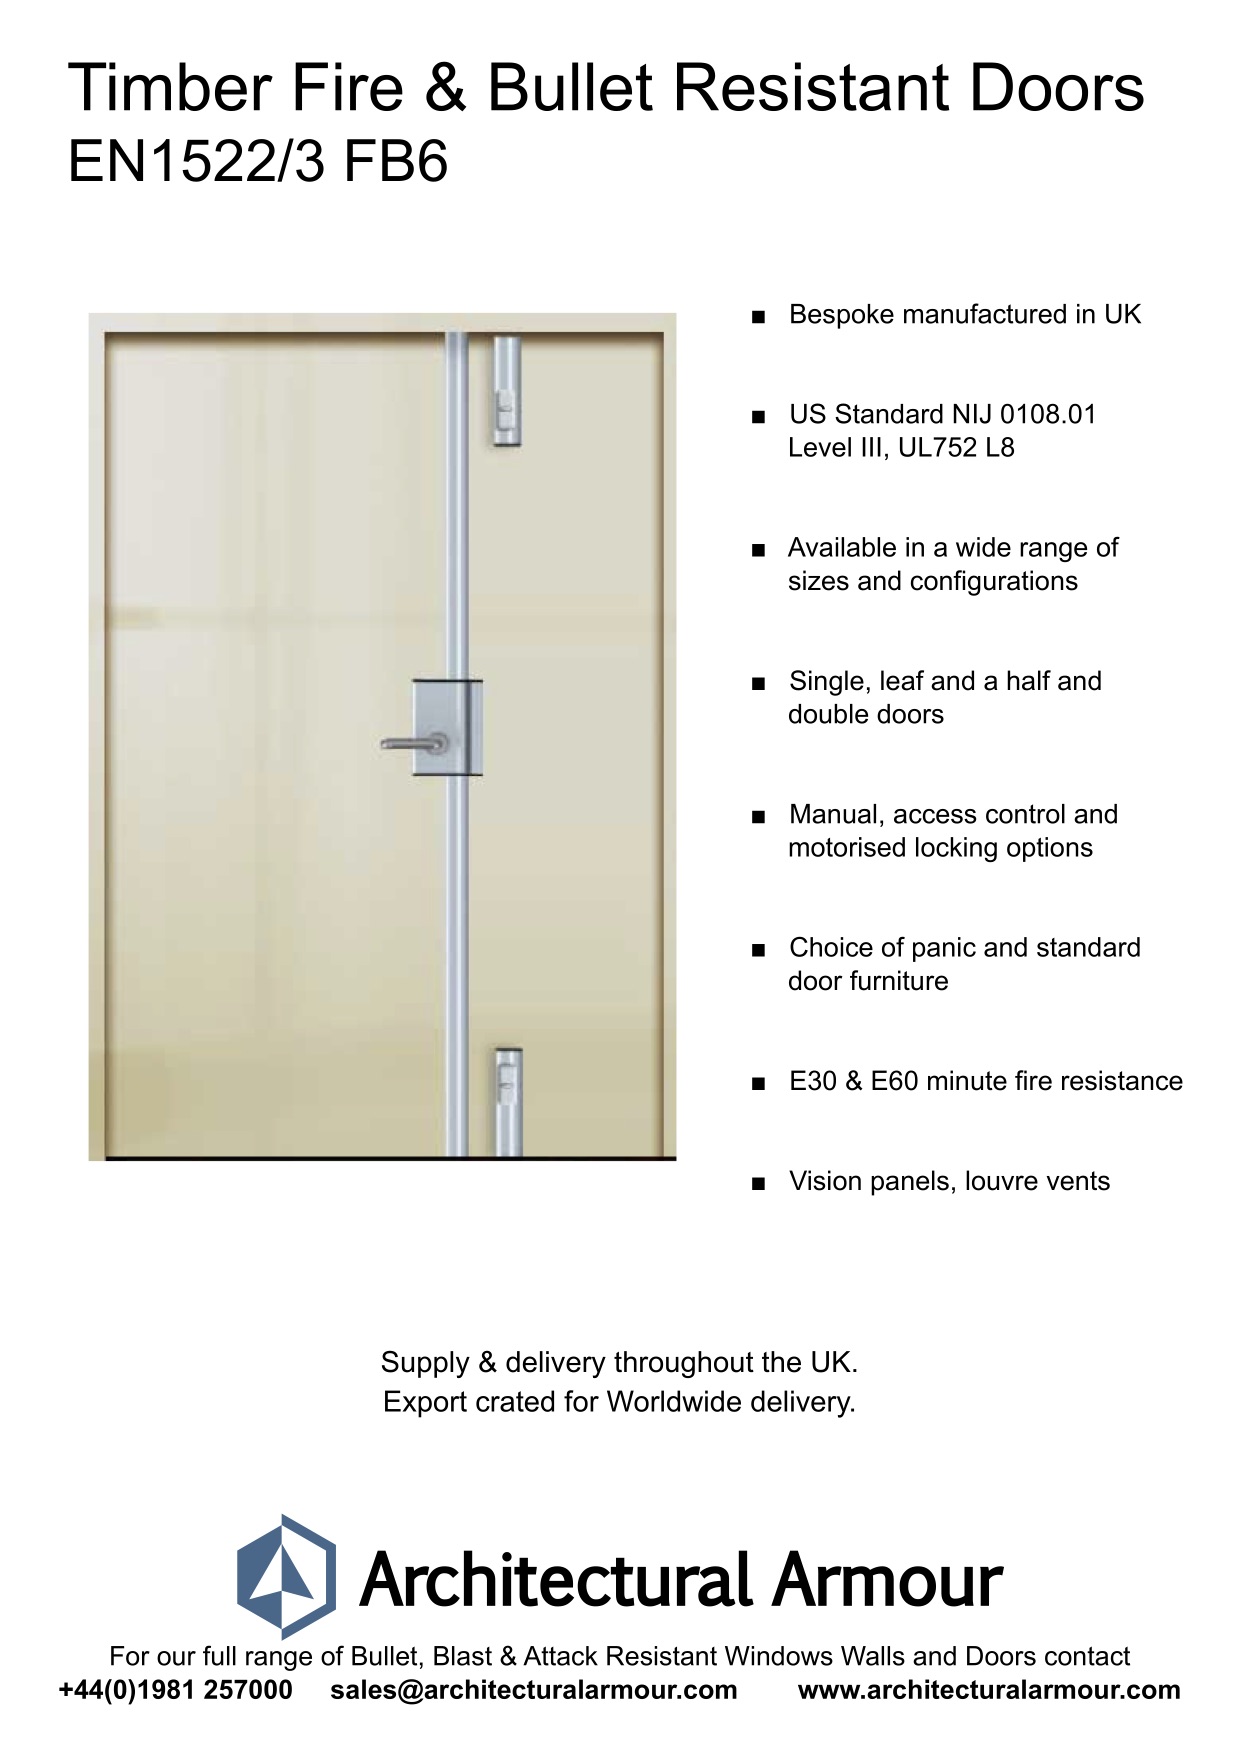 Fire-Resistant-and-Bullet-Resistant-EN1522-3-FB6-Timber-Doors